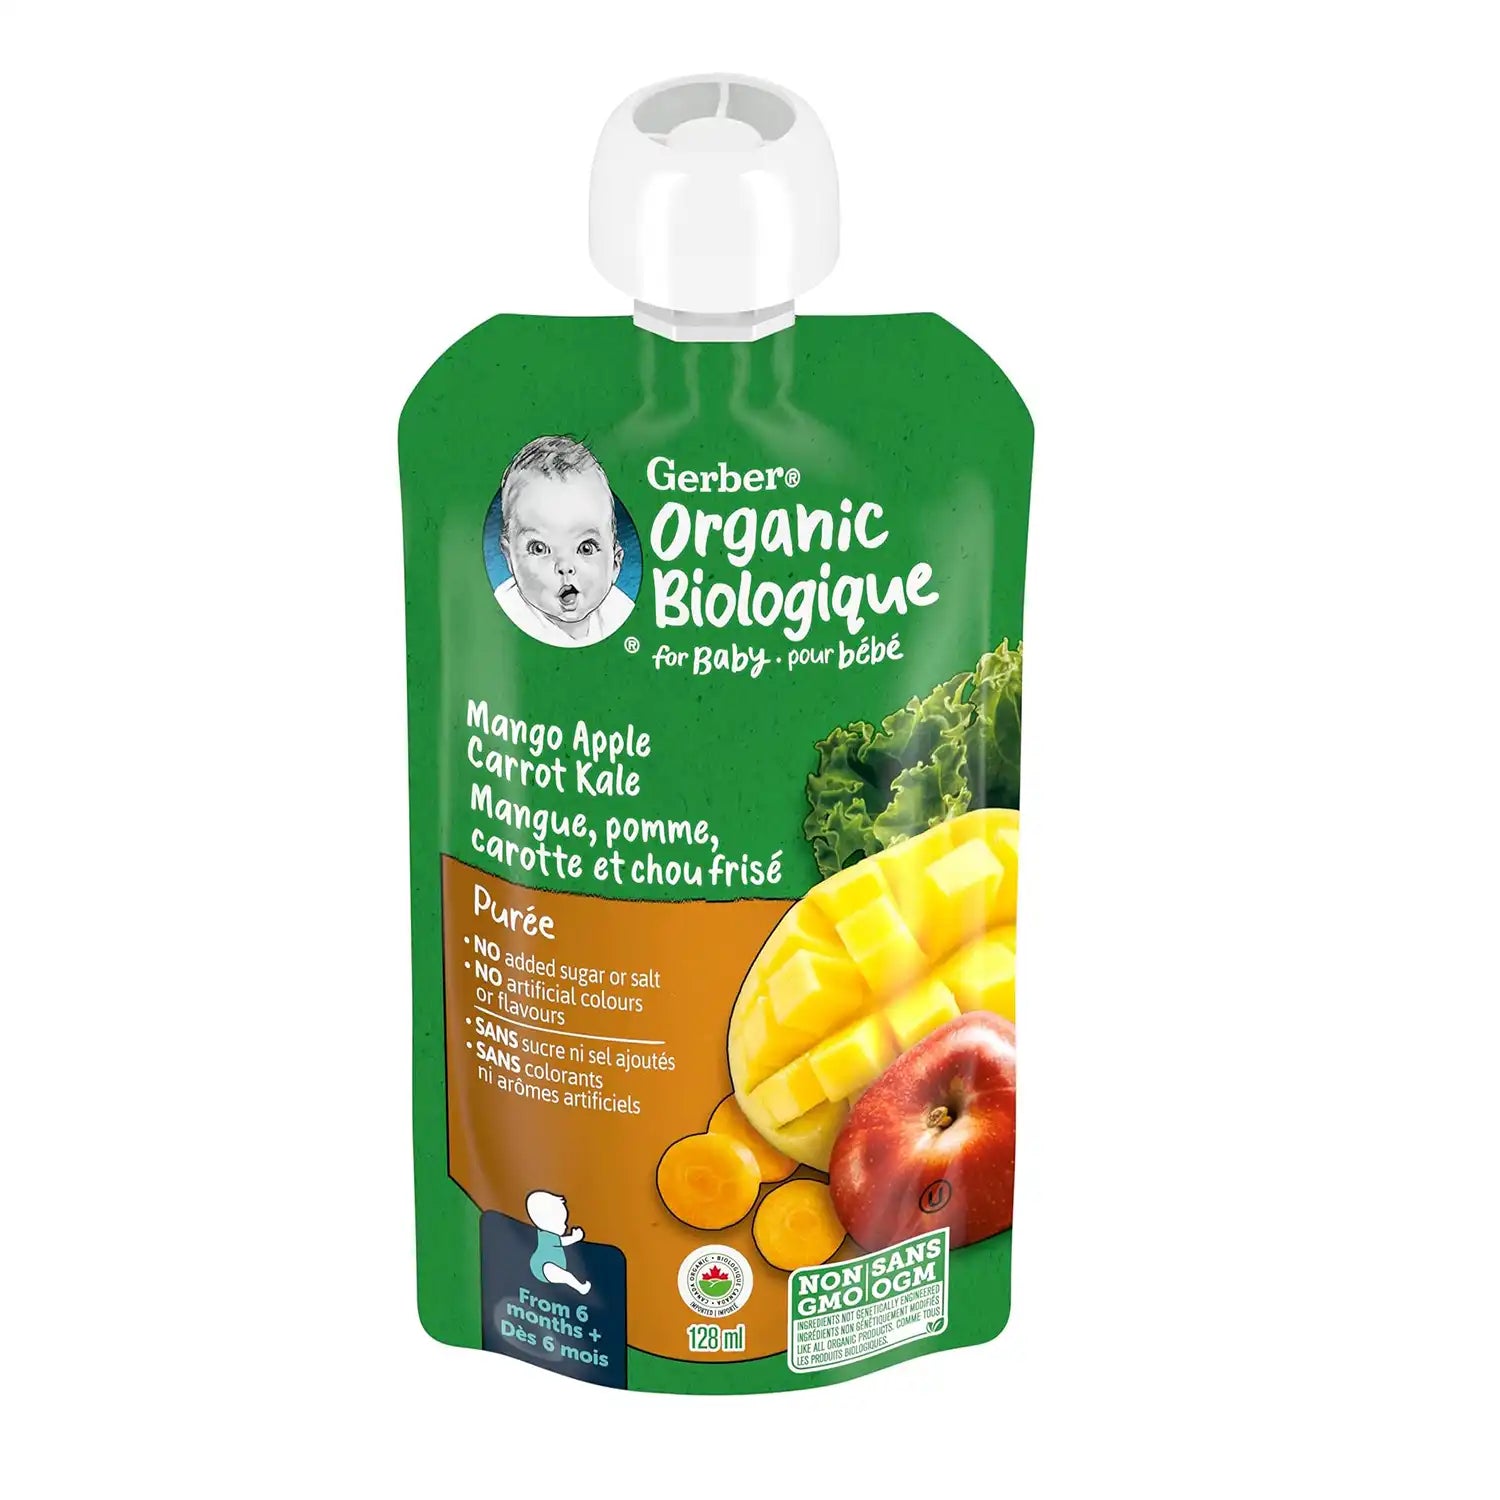 Buy Gerber Organic Biologique Puree for Babies, Mango, Apple, Carrot & Kale Online in India at uyyaala.com